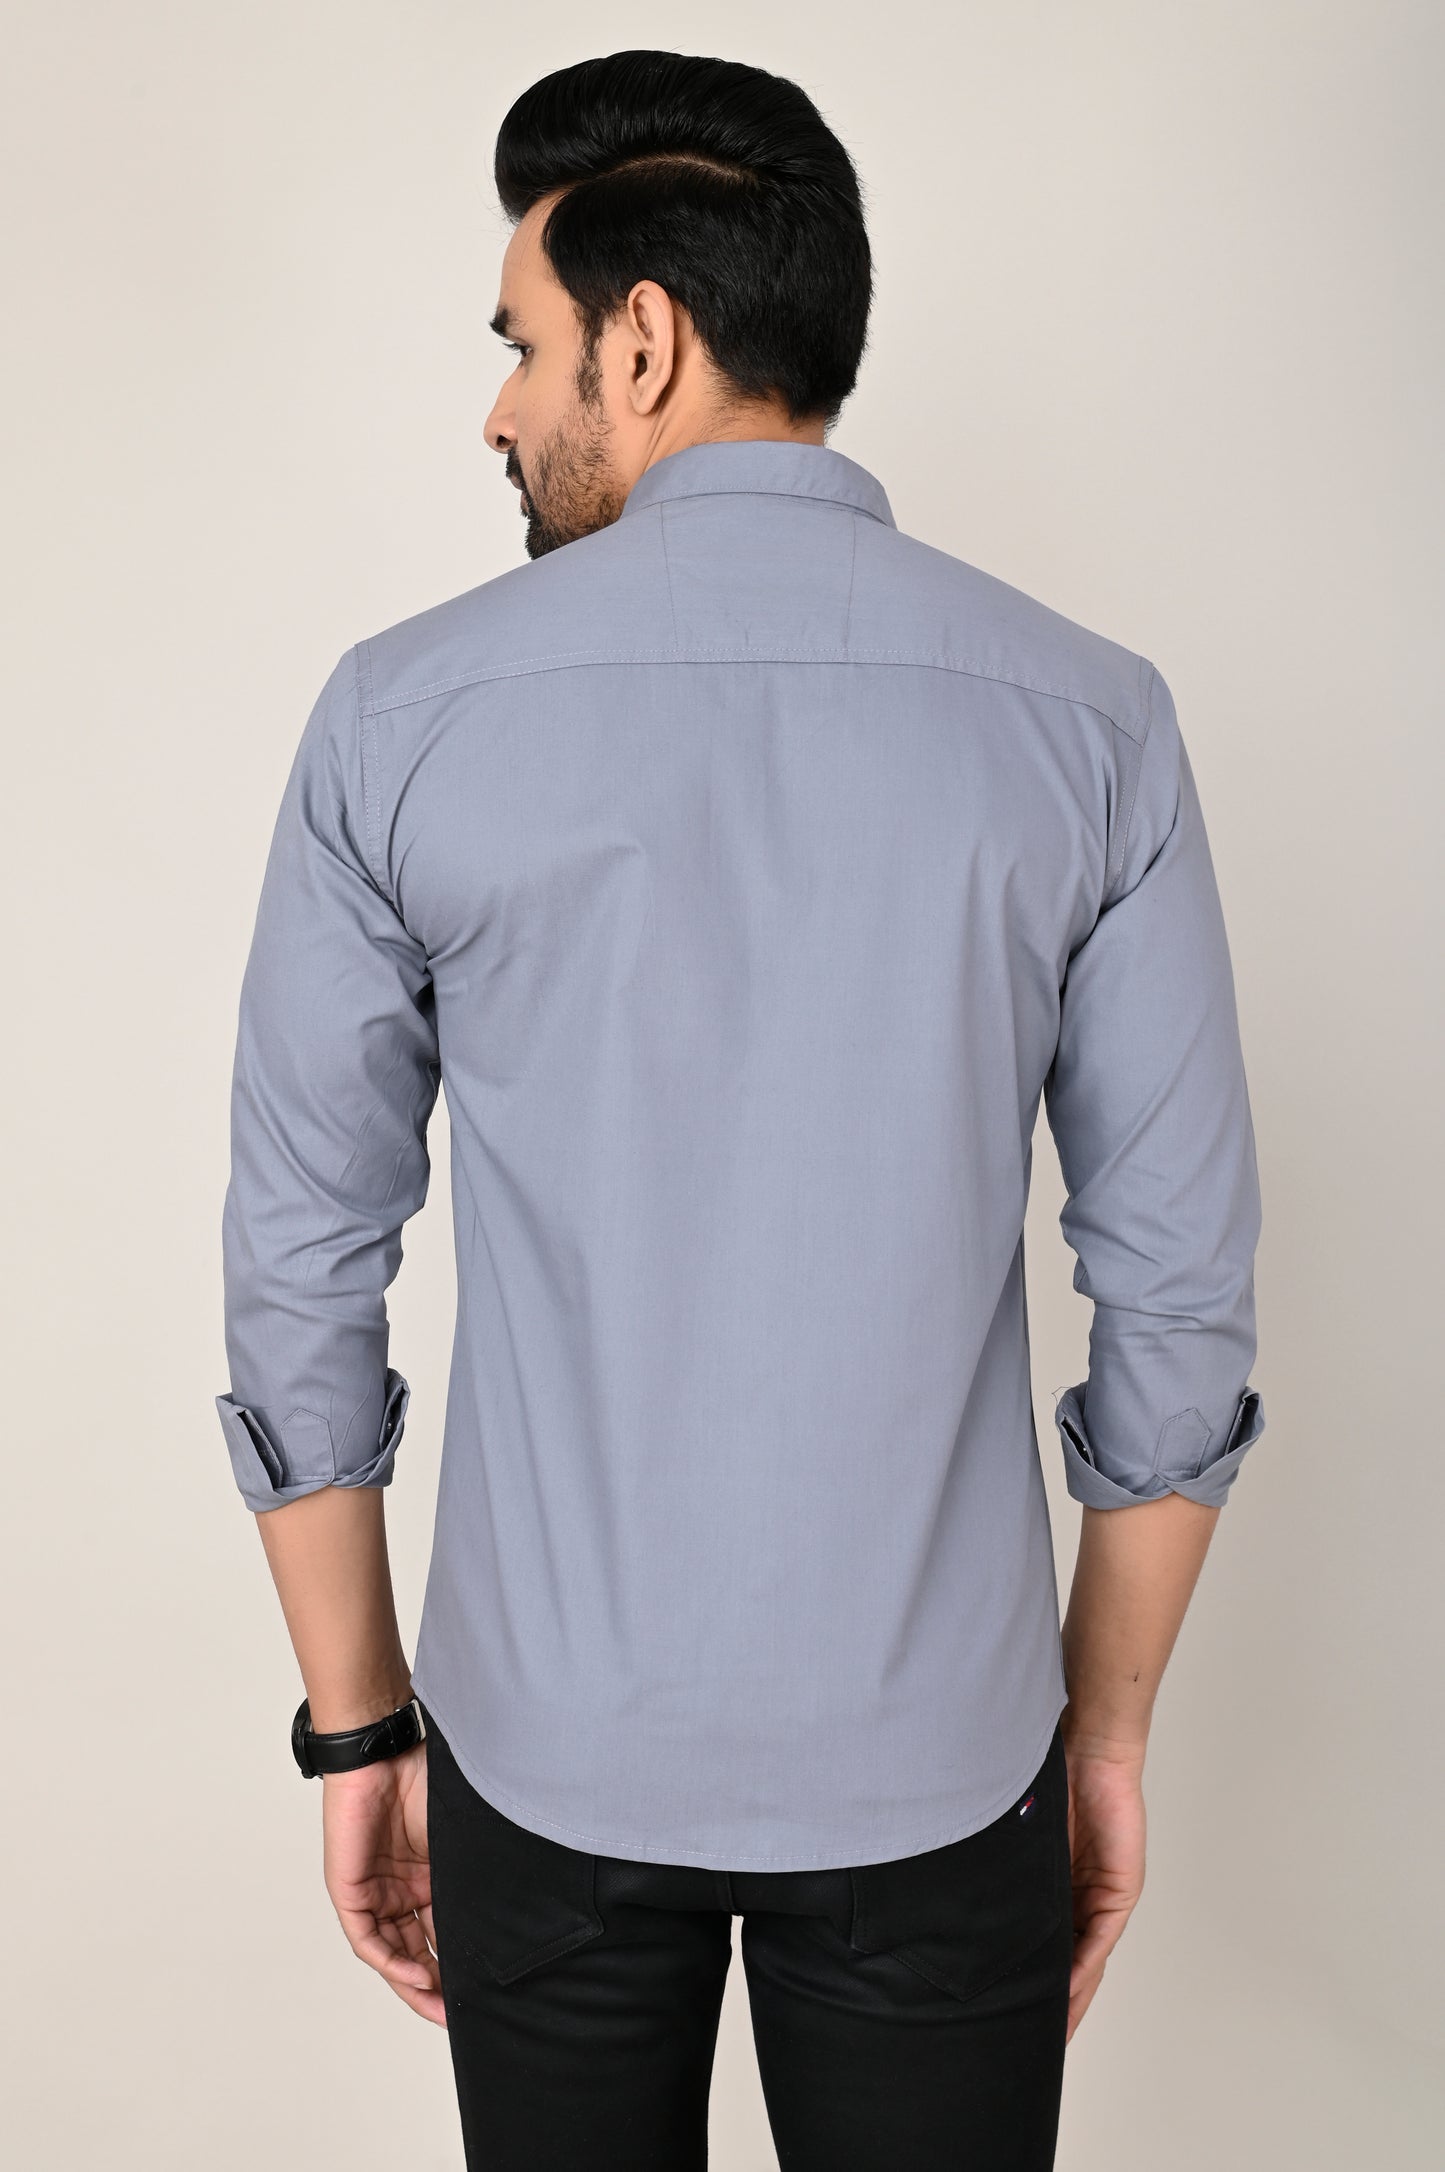 Men's Grey Full Sleeves shirts